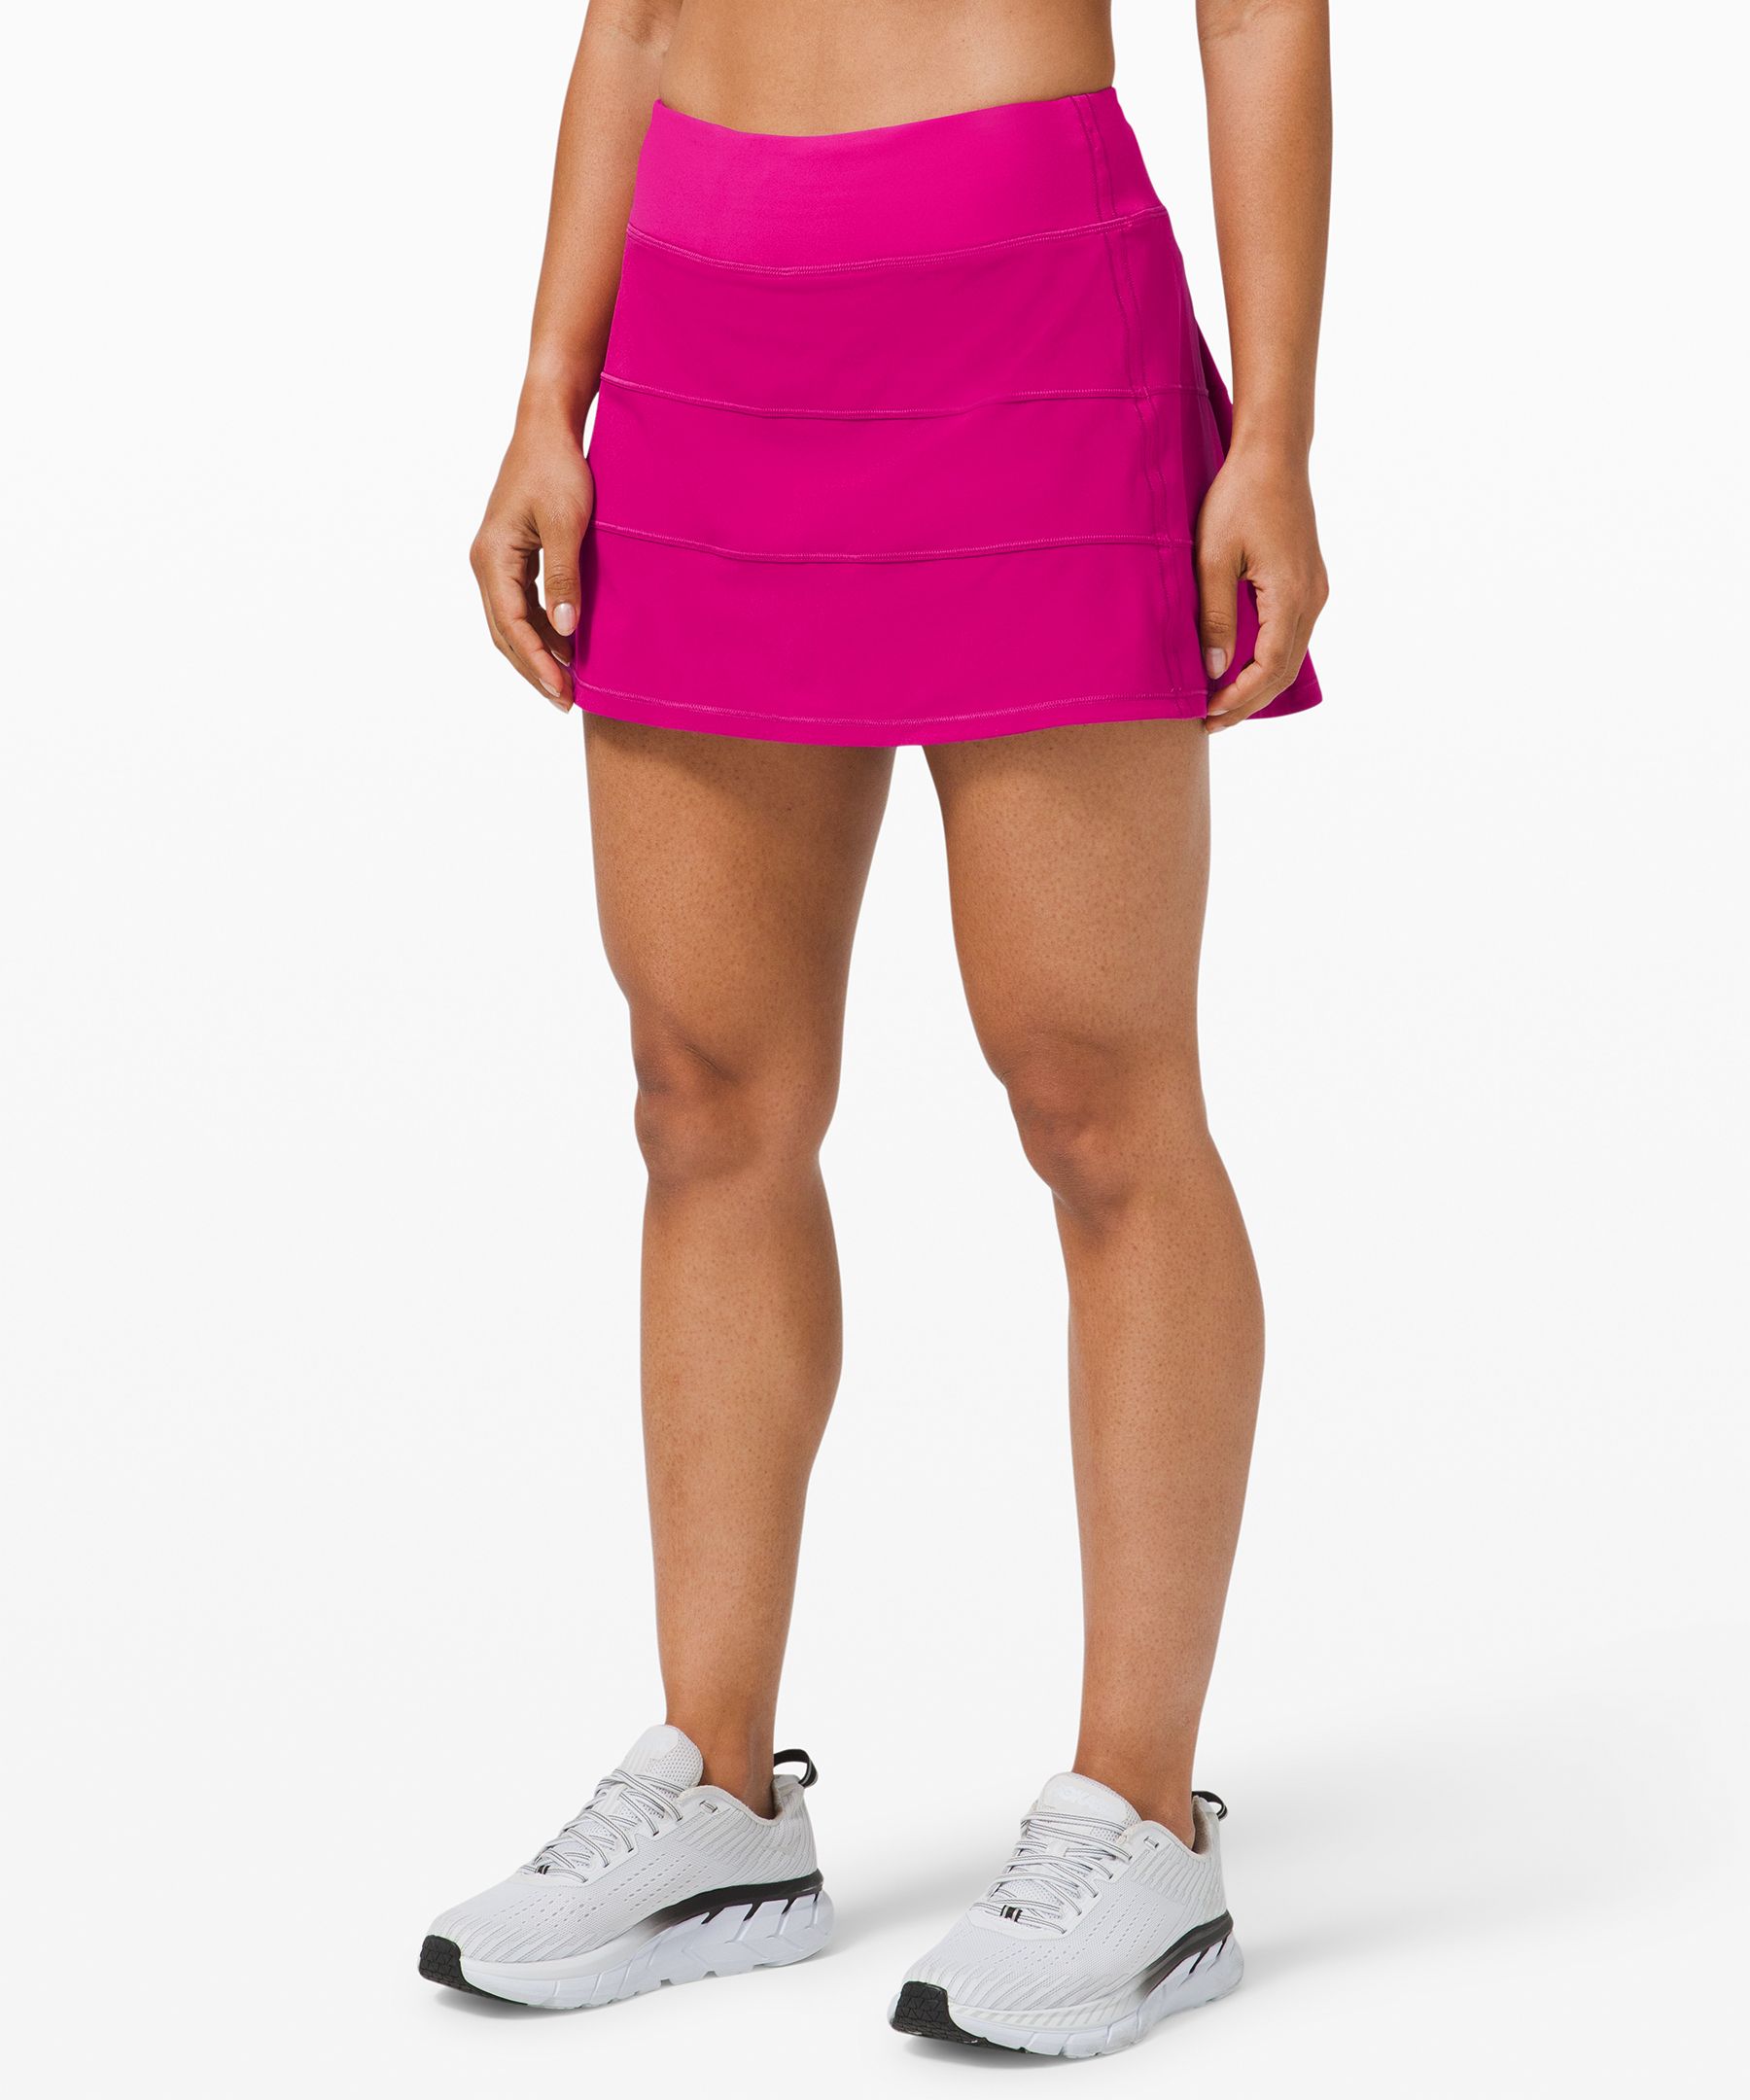 Lululemon Pace Rival Mid-rise Tennis Skirt 15 Length In Ripened